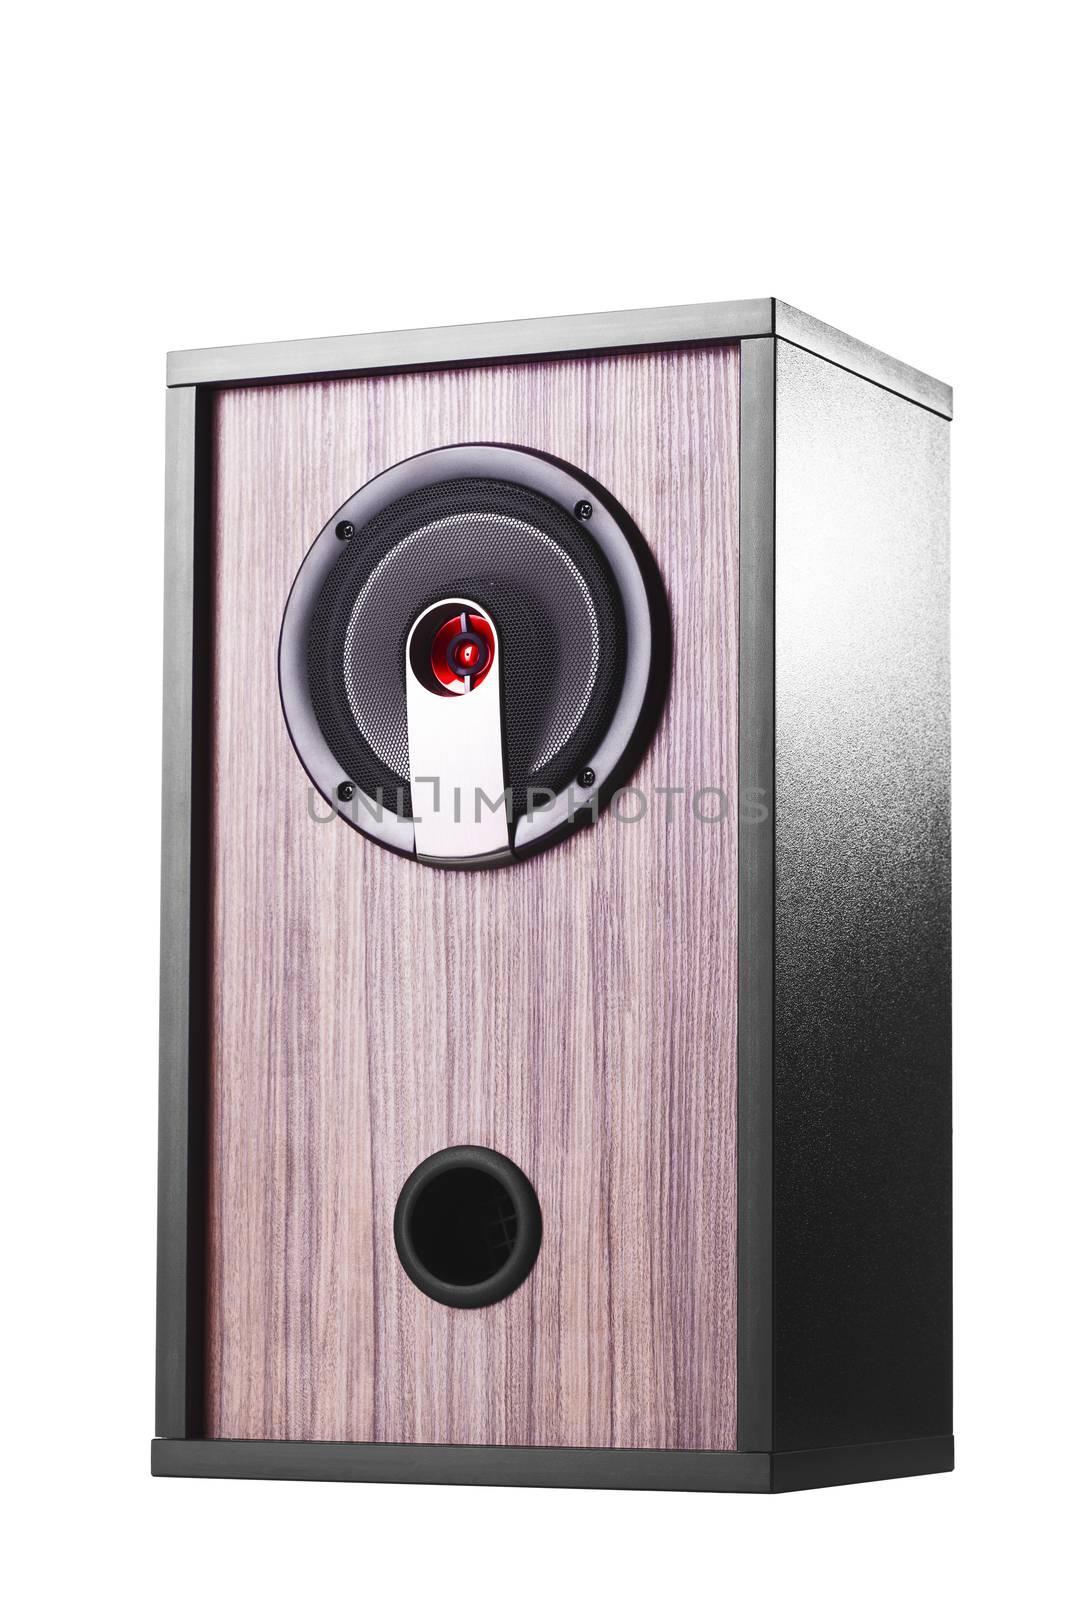 black wooden audio speaker box, isolated on white background